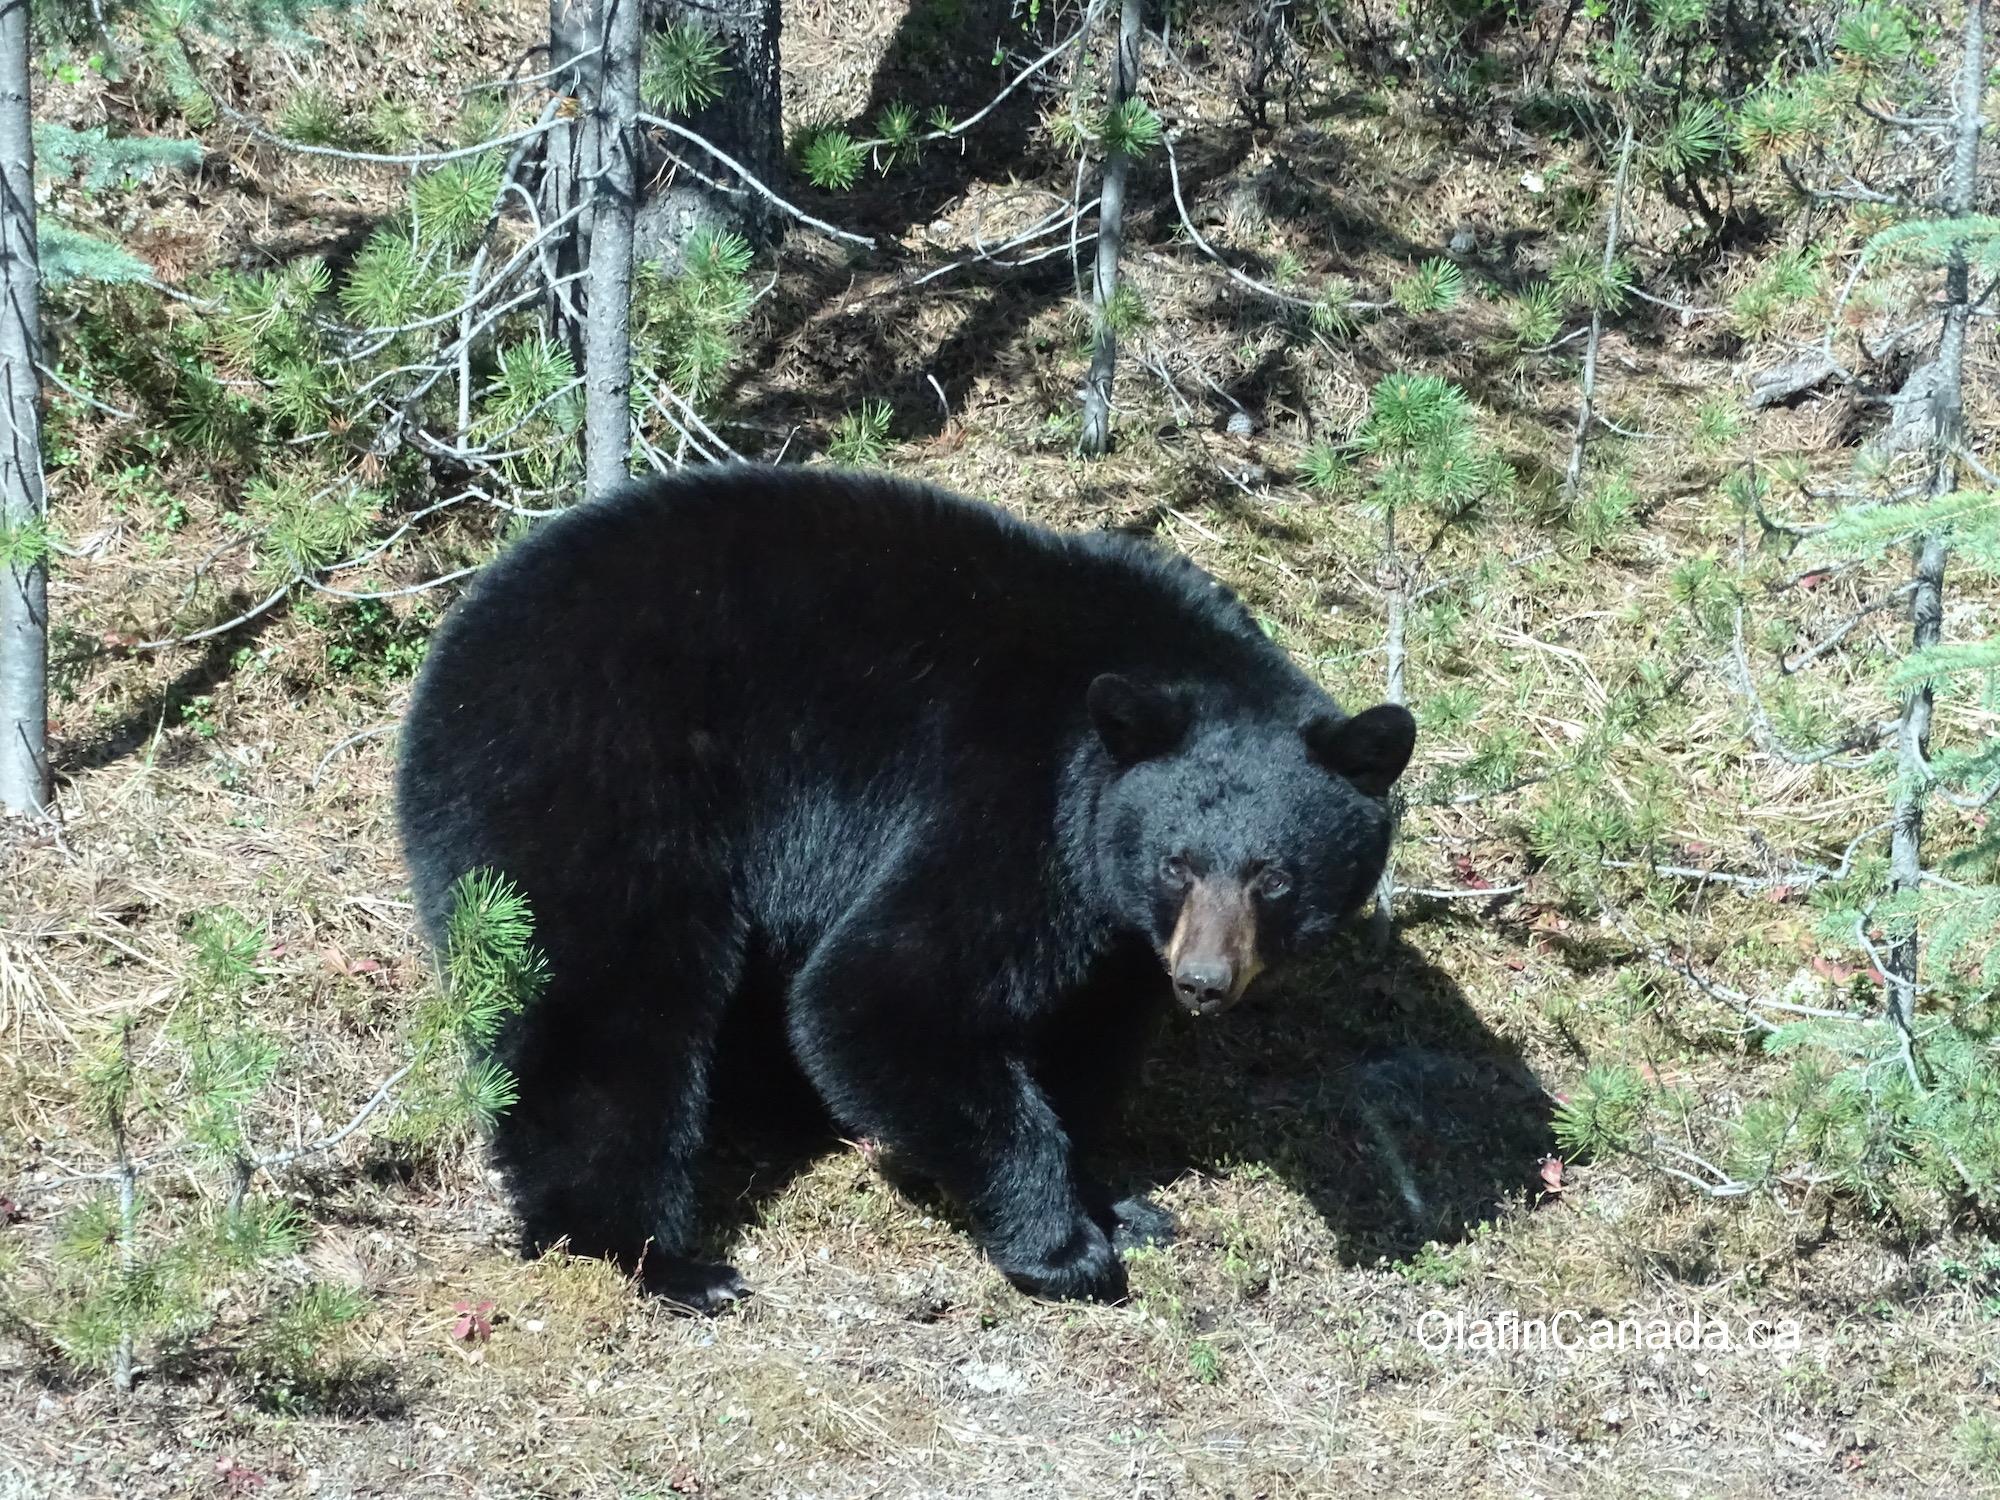 Black bear with shiny fur at Blue River, BC #olafincanada #britishcolumbia #discoverbc #wildlife #blueriver #blackbear